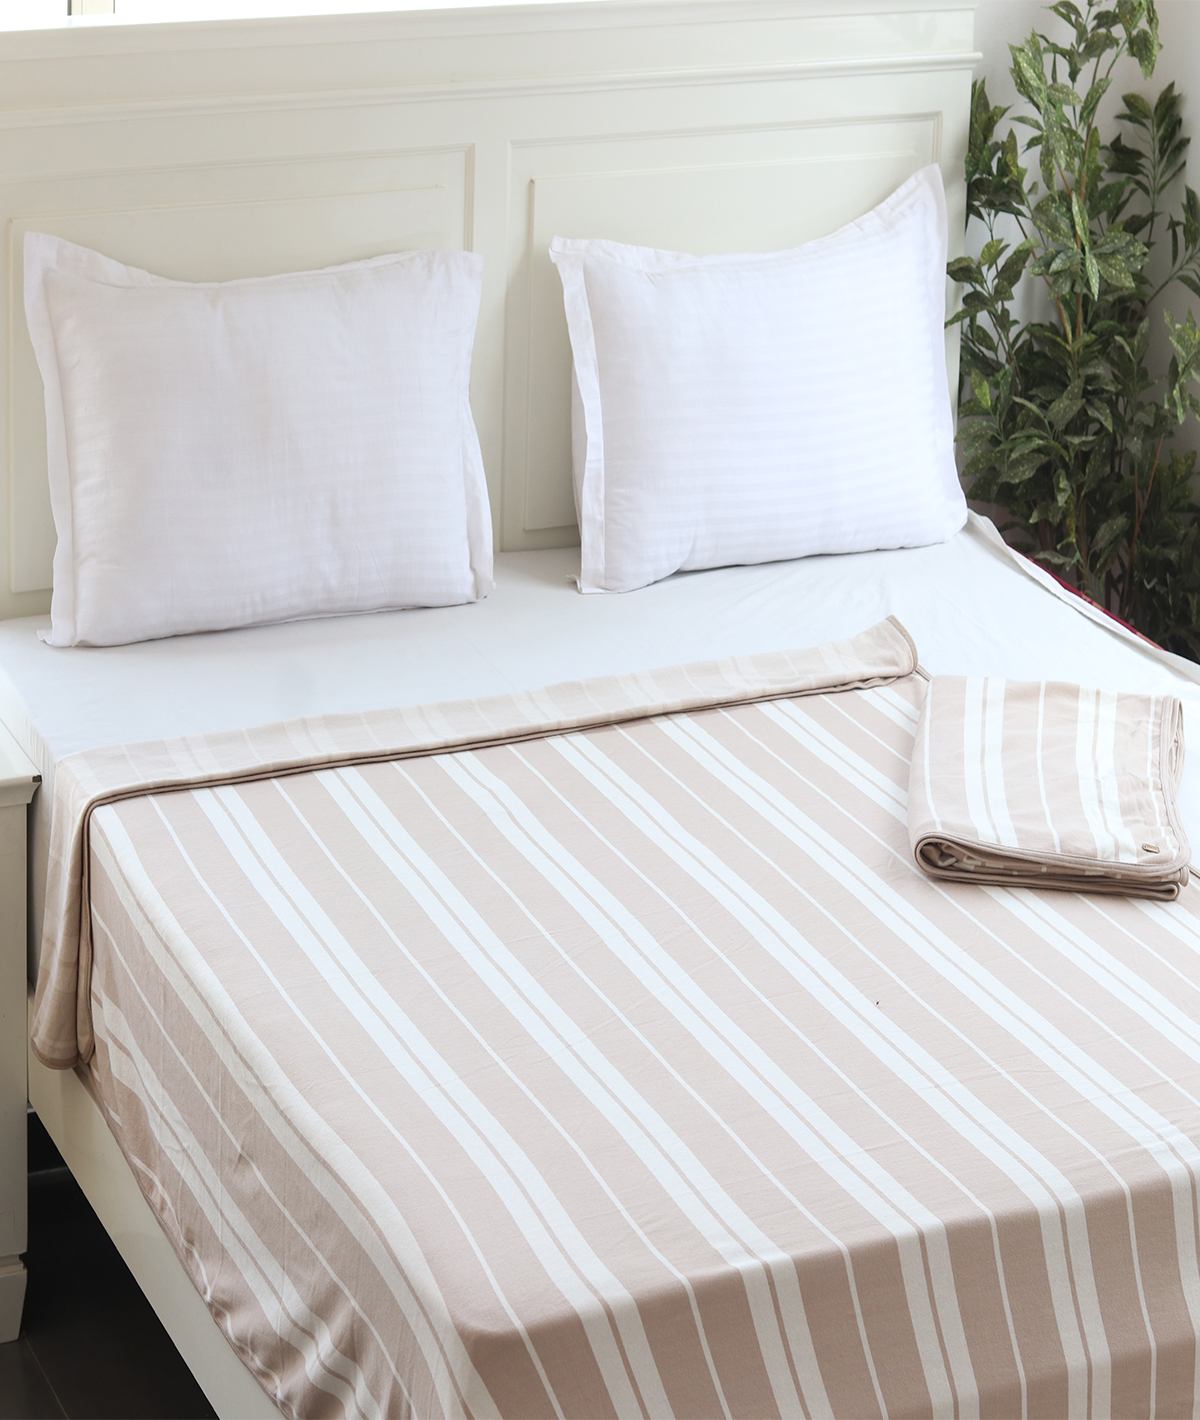 Flat Bed Sheets